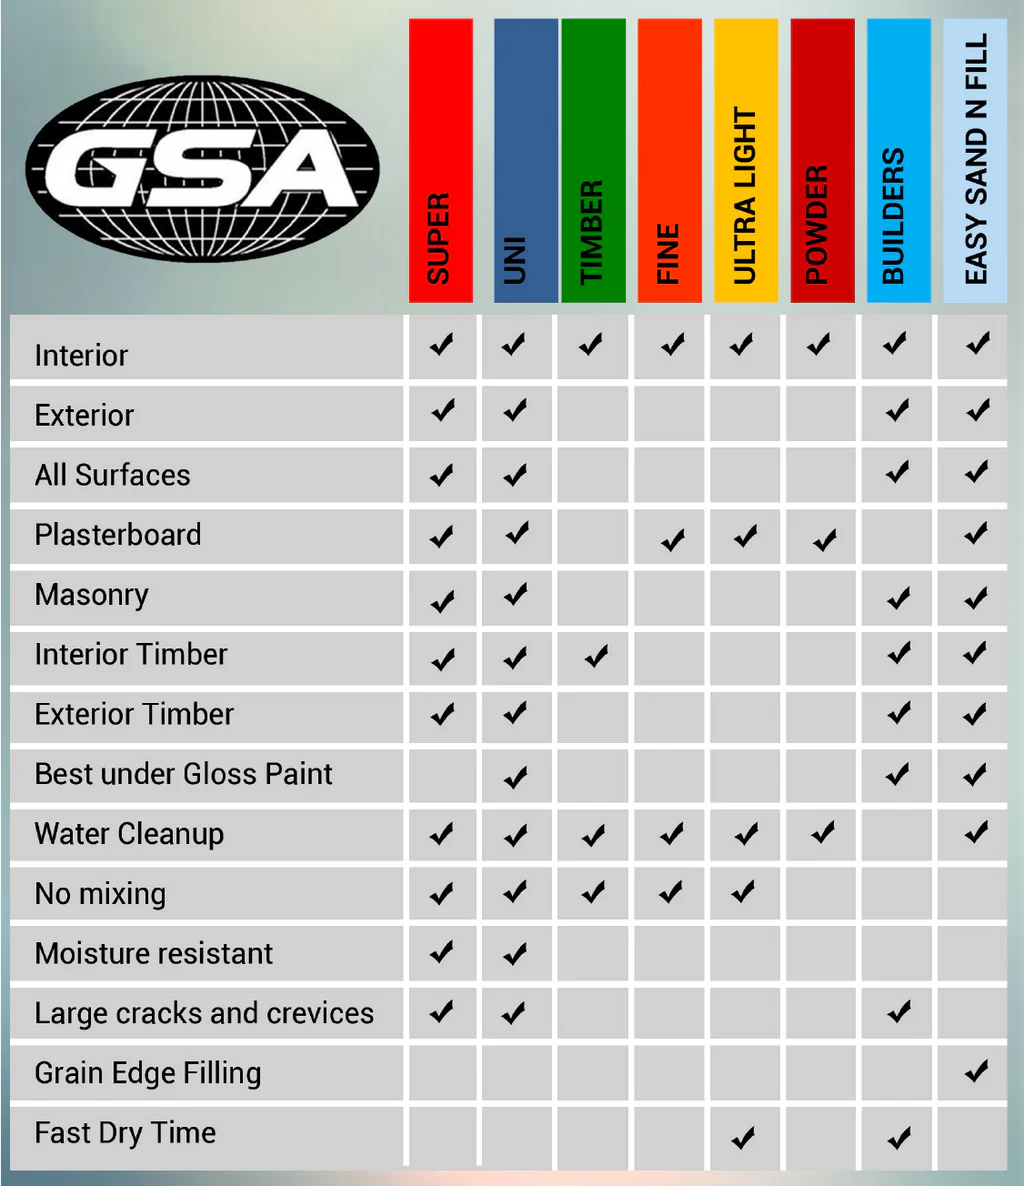 GSA Acrylic Gap Filler 450G